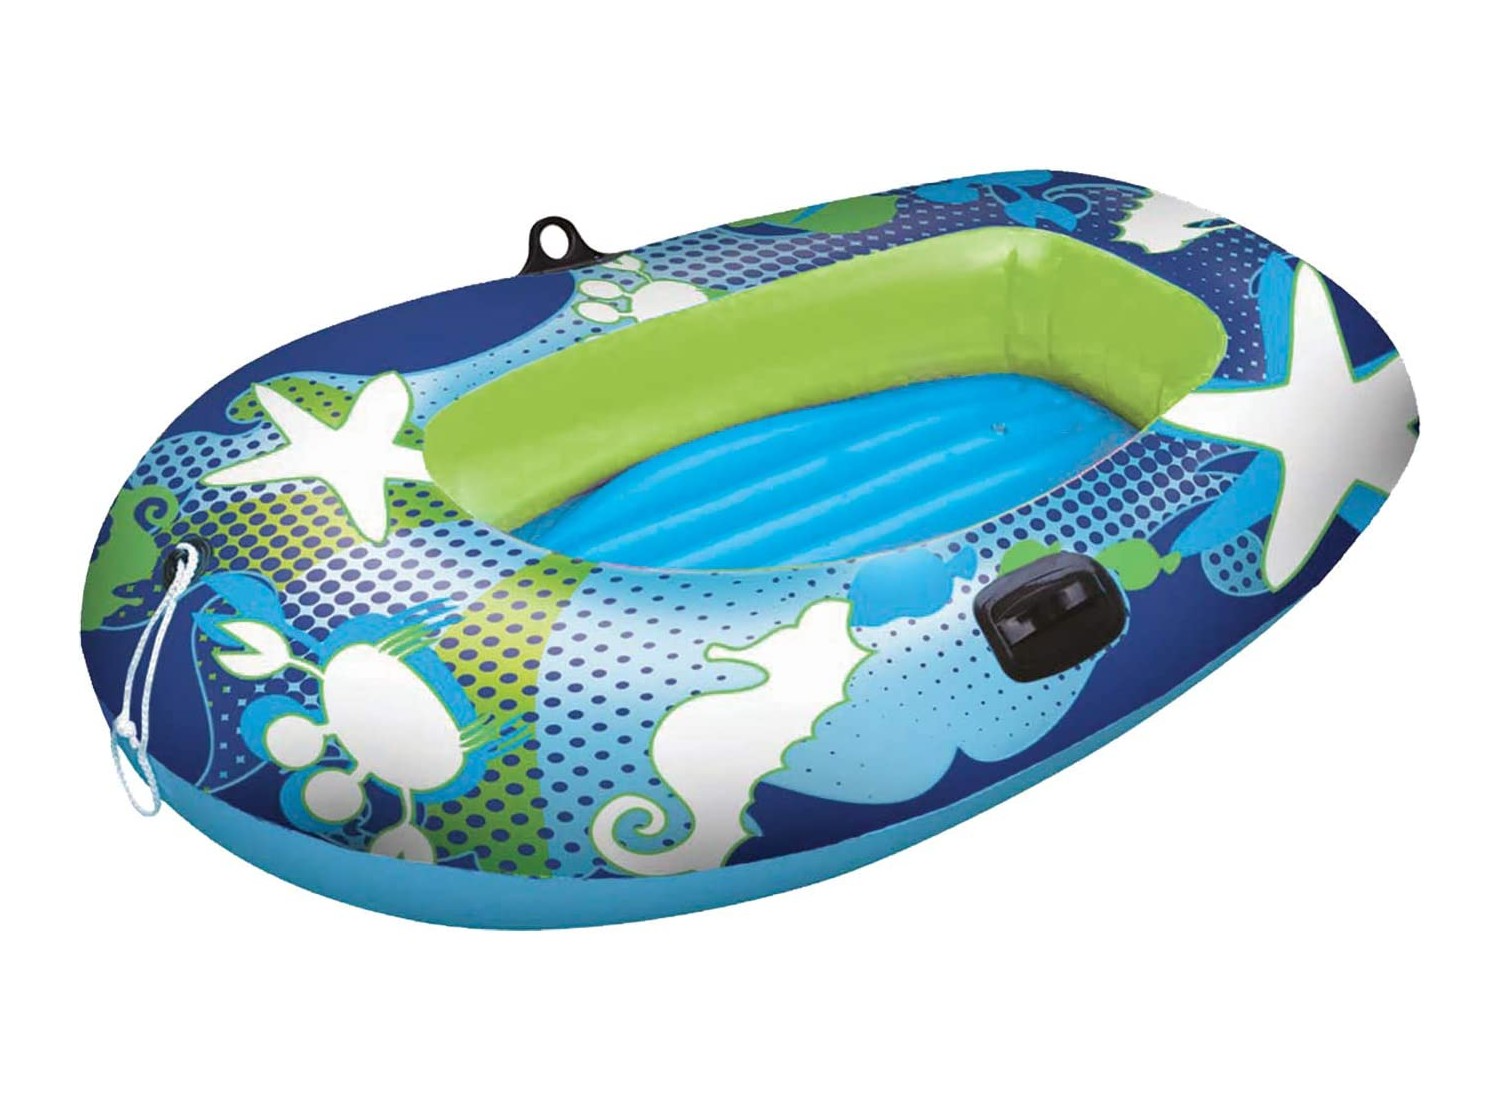 Poolmaster Inflatable Boat